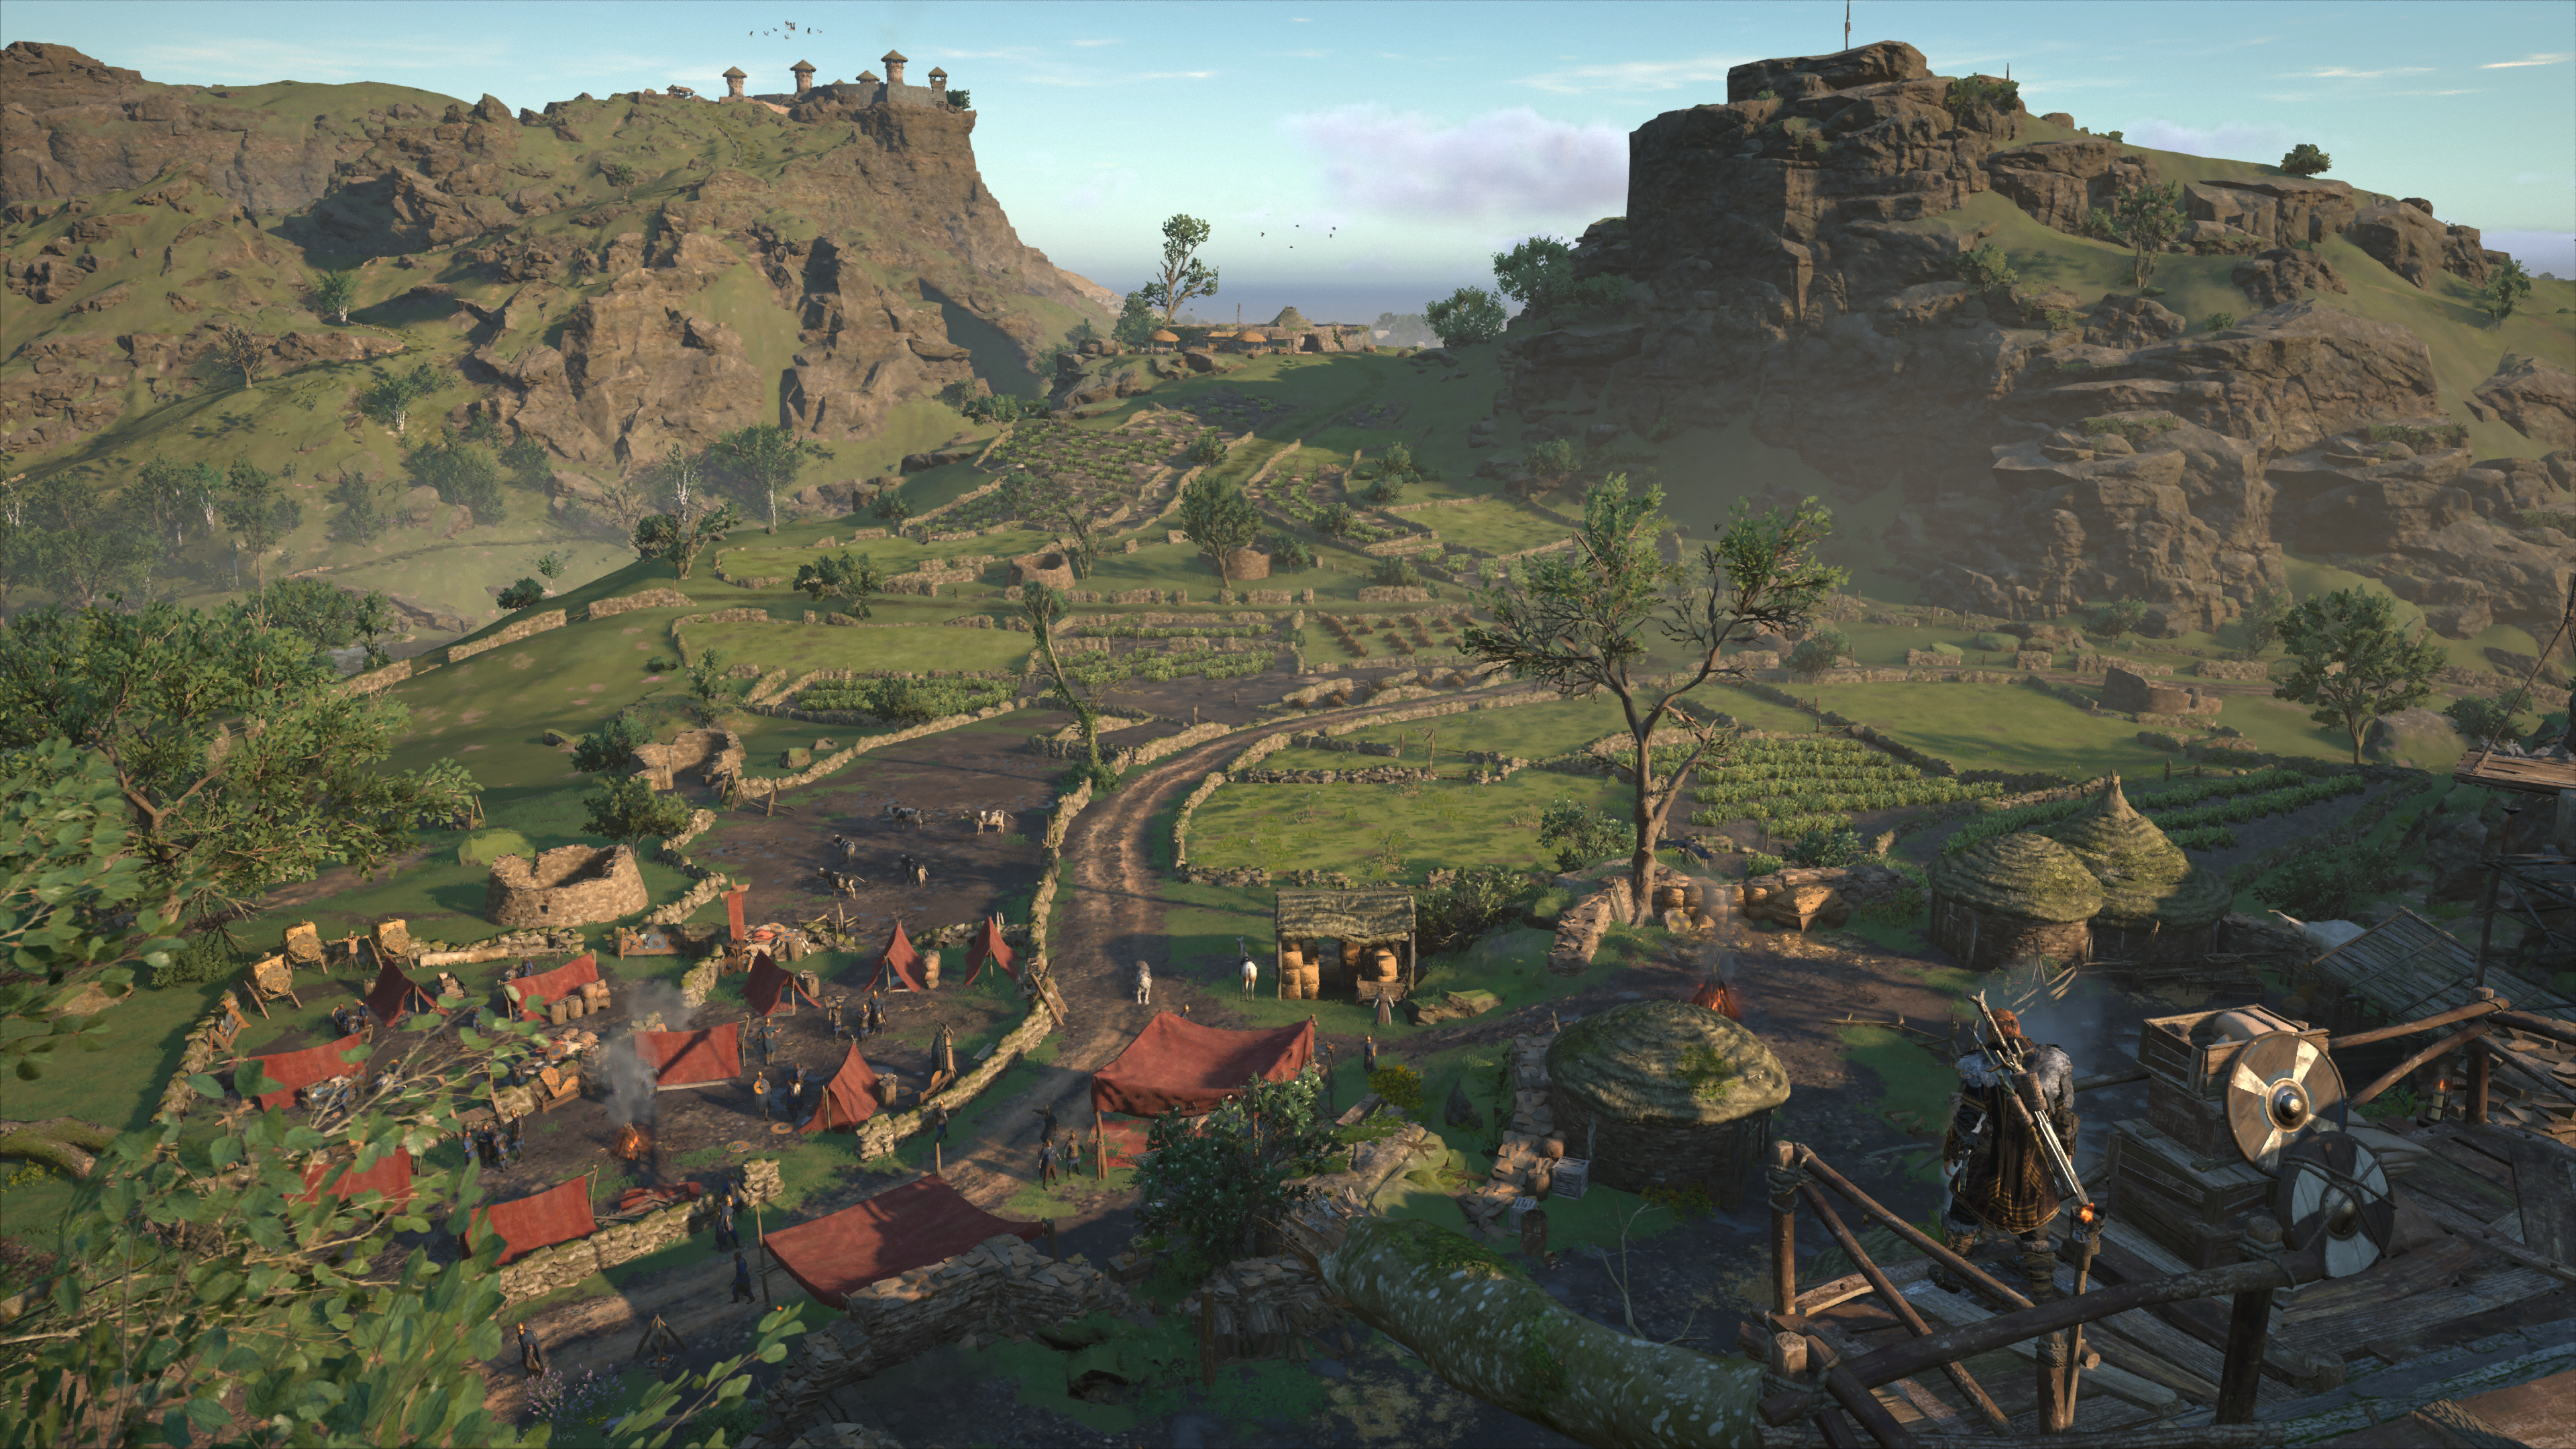 Assassin's Creed II: The Bonfires of the Vanities Review - GameSpot